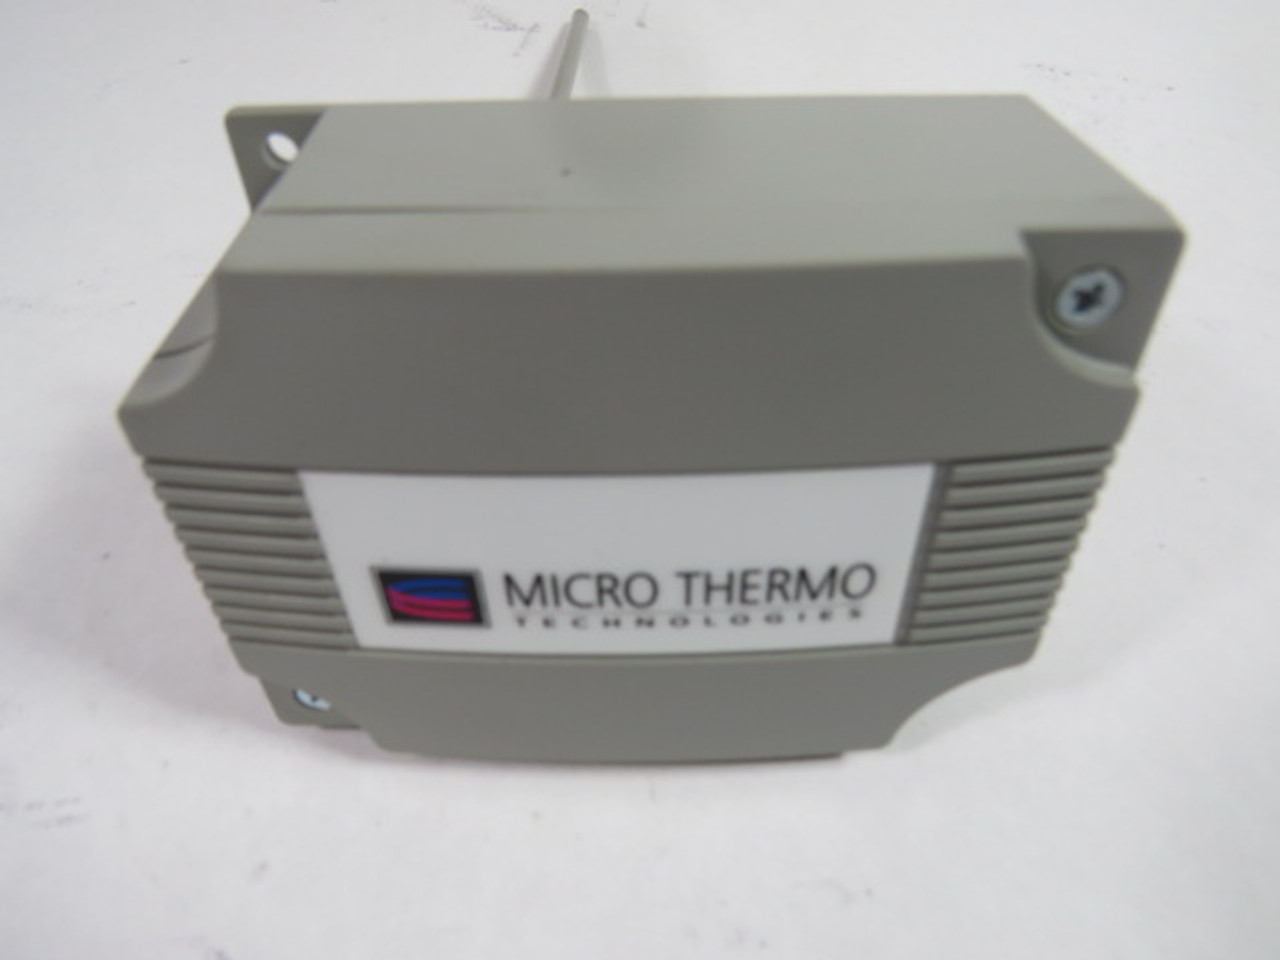 Micro Thermo 23-0053 Grey Duct Temperature Sensor 8" 10KOHM Thermistor USED